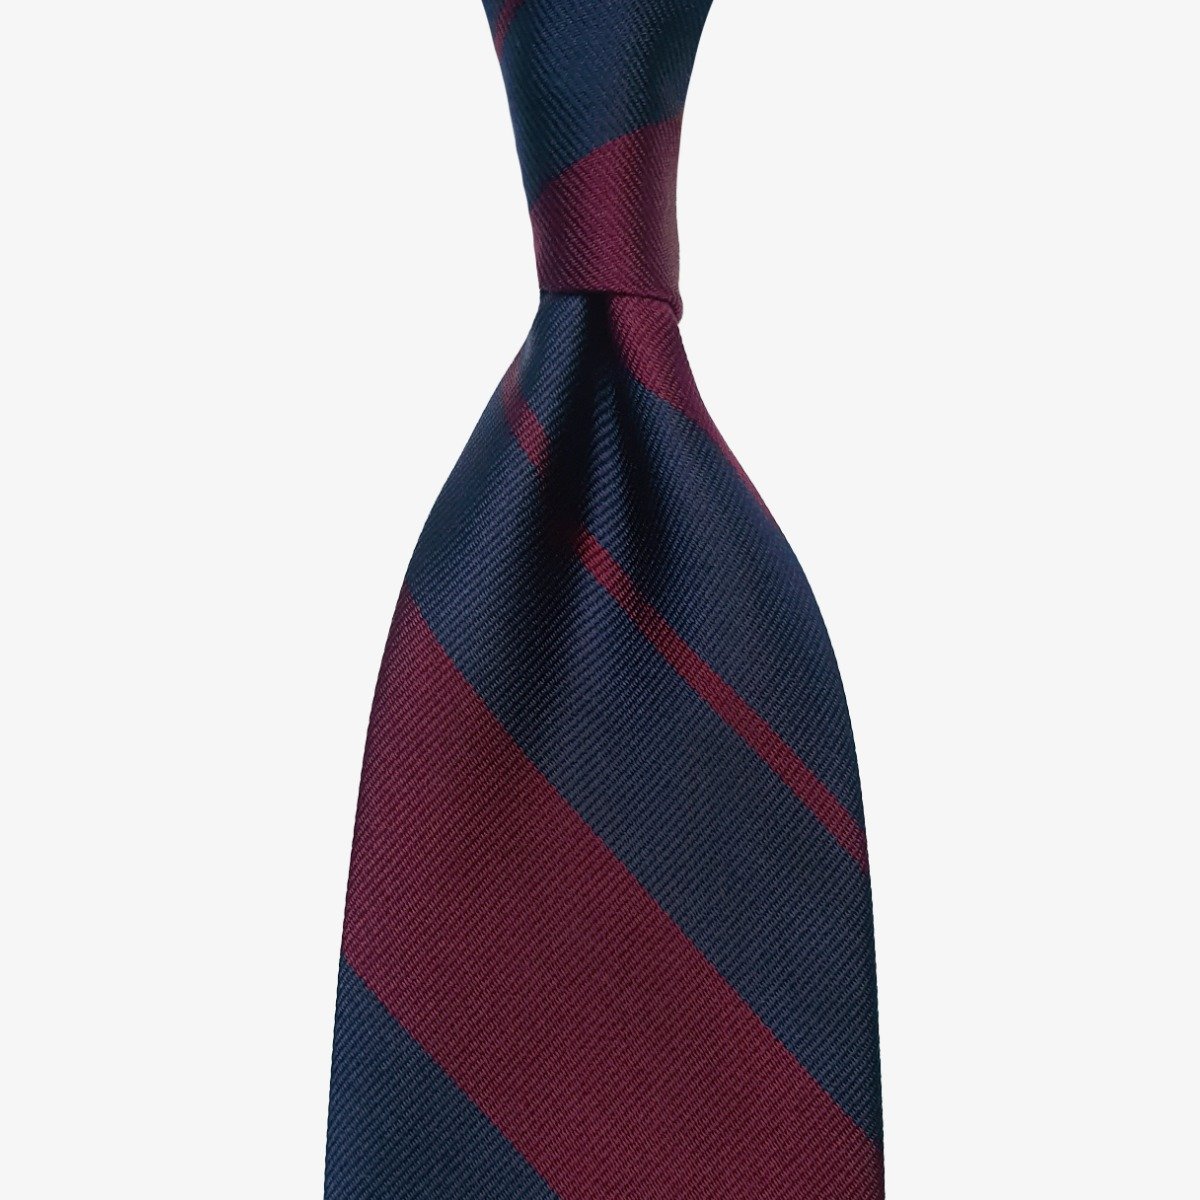 Shibumi Firenze navy and burgundy repp striped silk tie